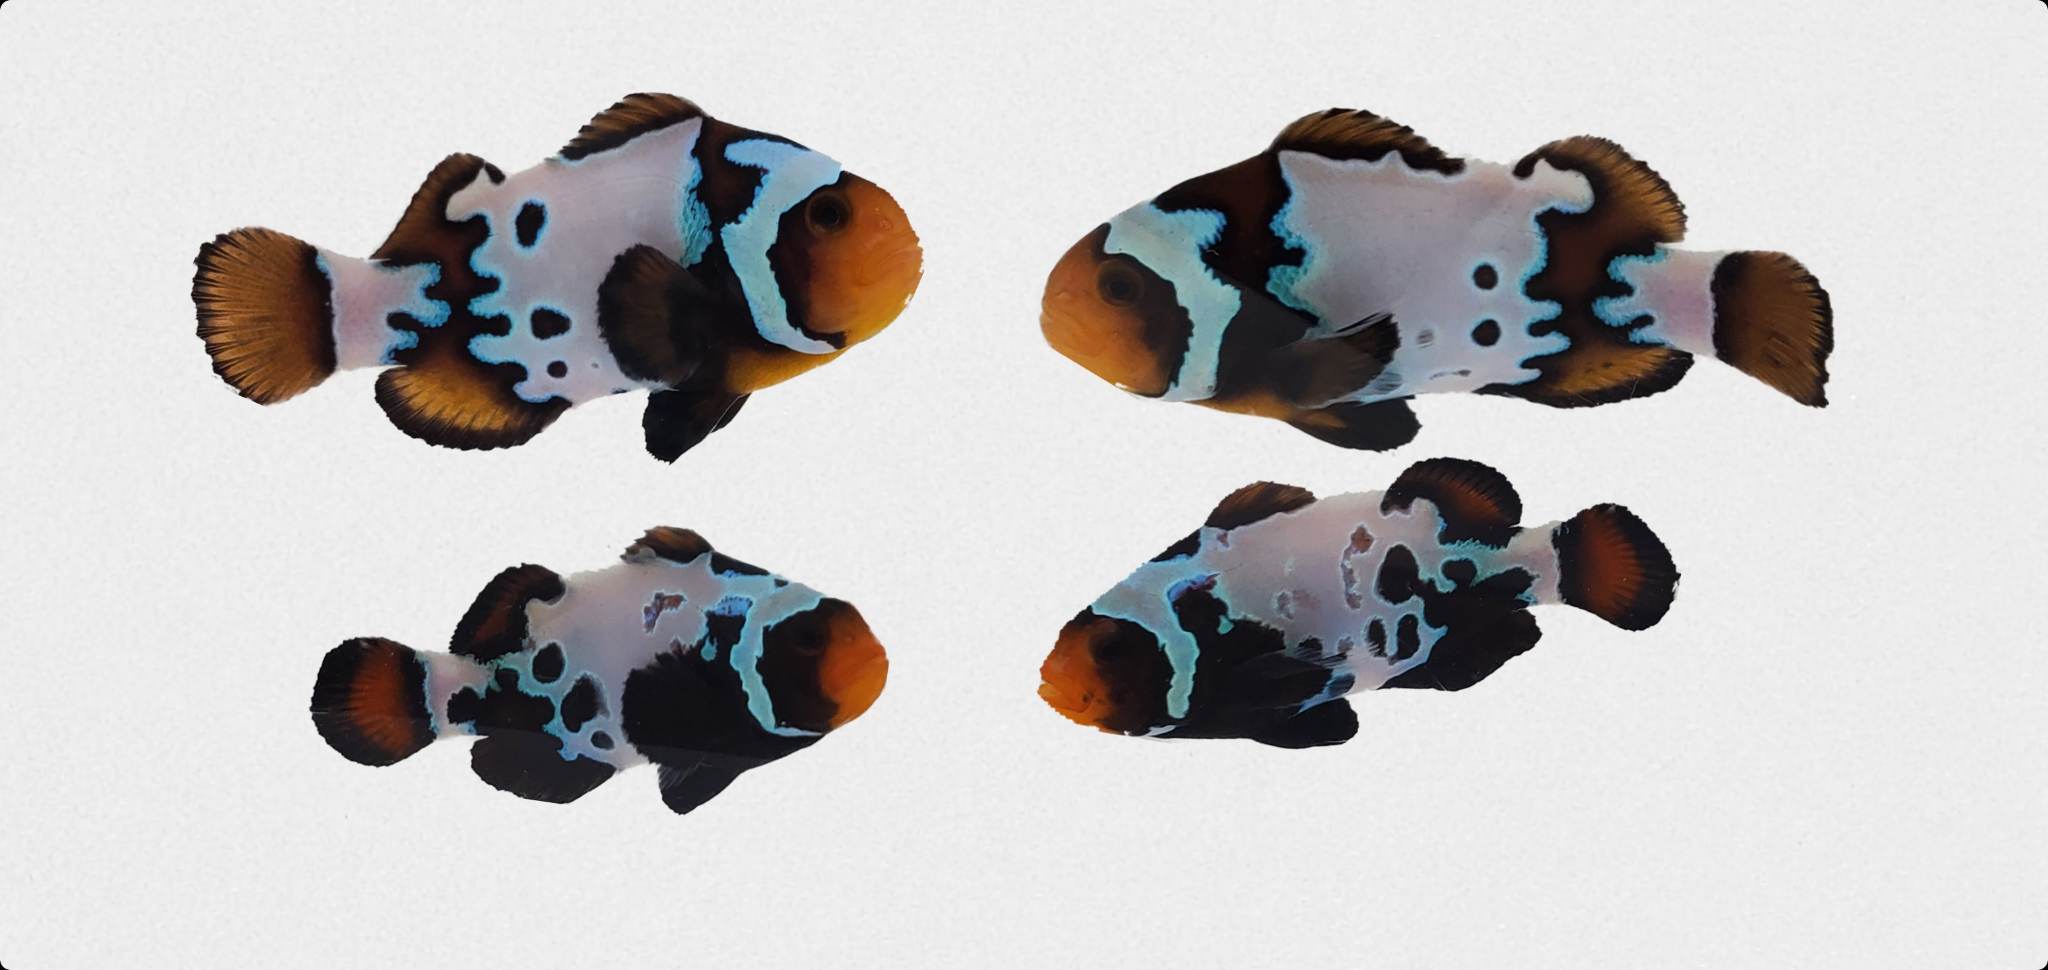 blacker ice clownfish